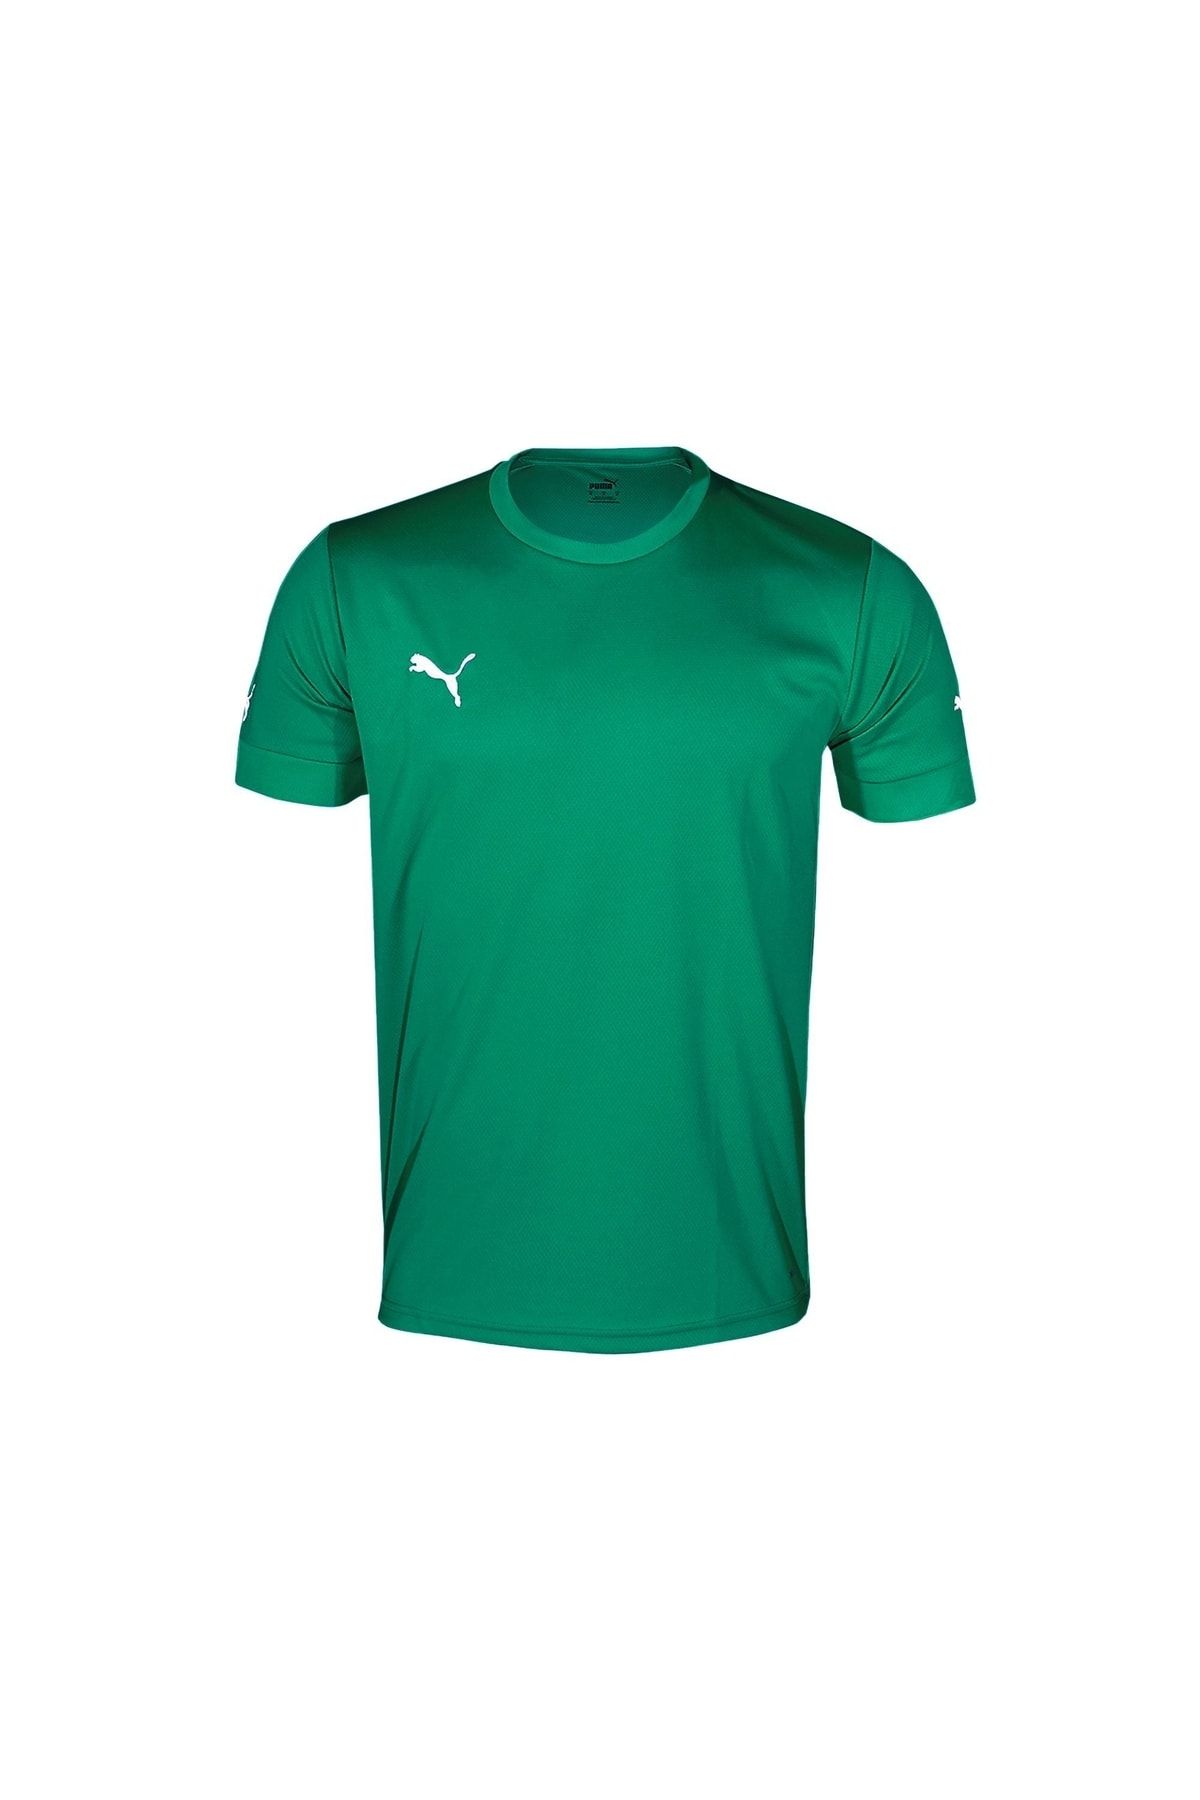 Puma Smu Turkey Jersey Erkek Futbol Forması 77349805 Yeşil